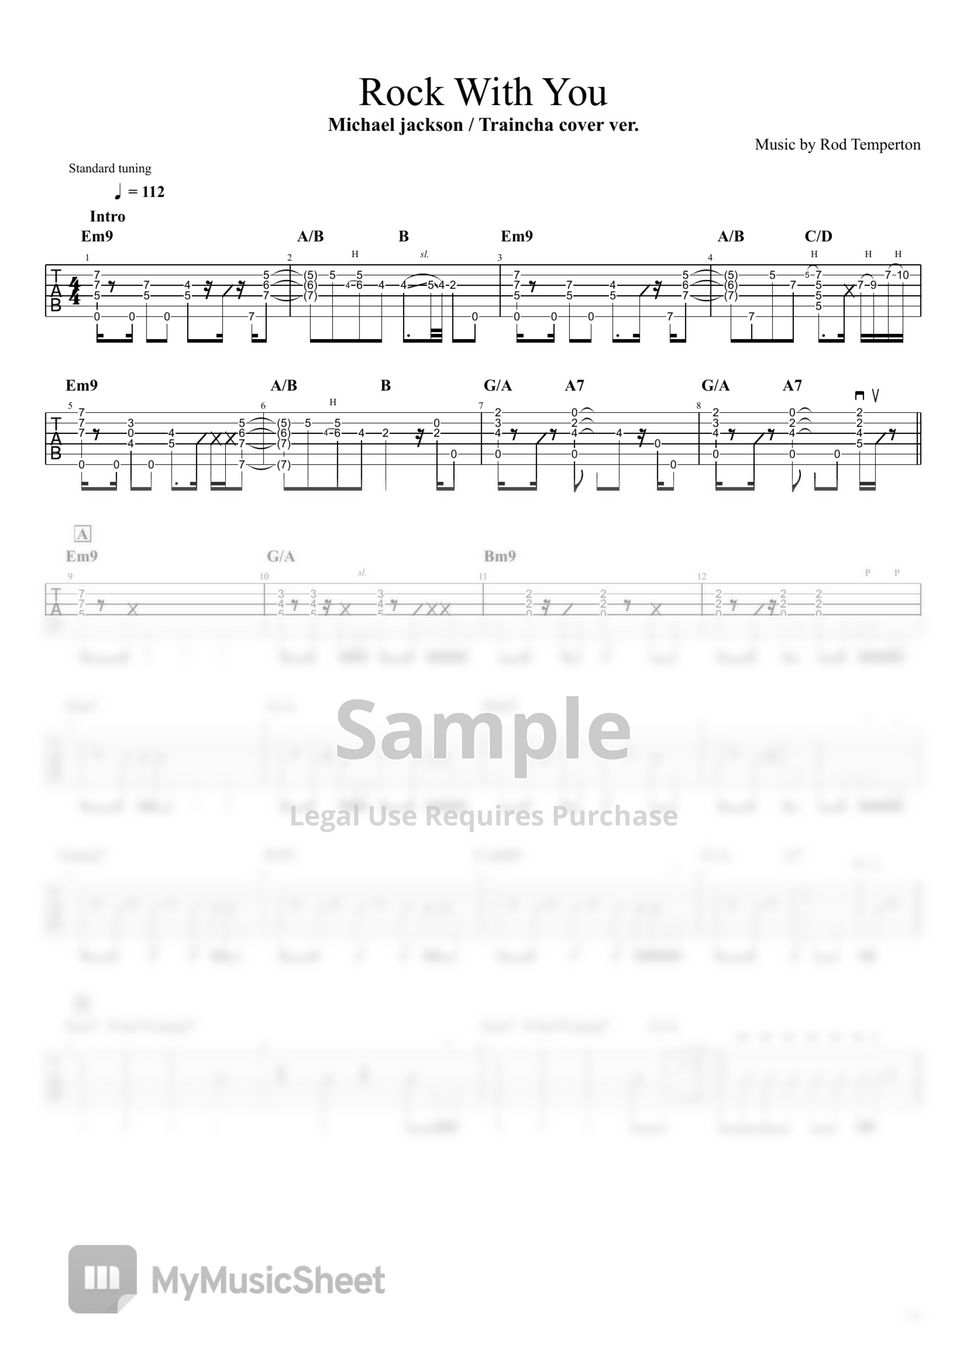 Michael Joseph Jackson - Rock With You (A.guitar (Traincha cover ver.) tab) by Yoppi